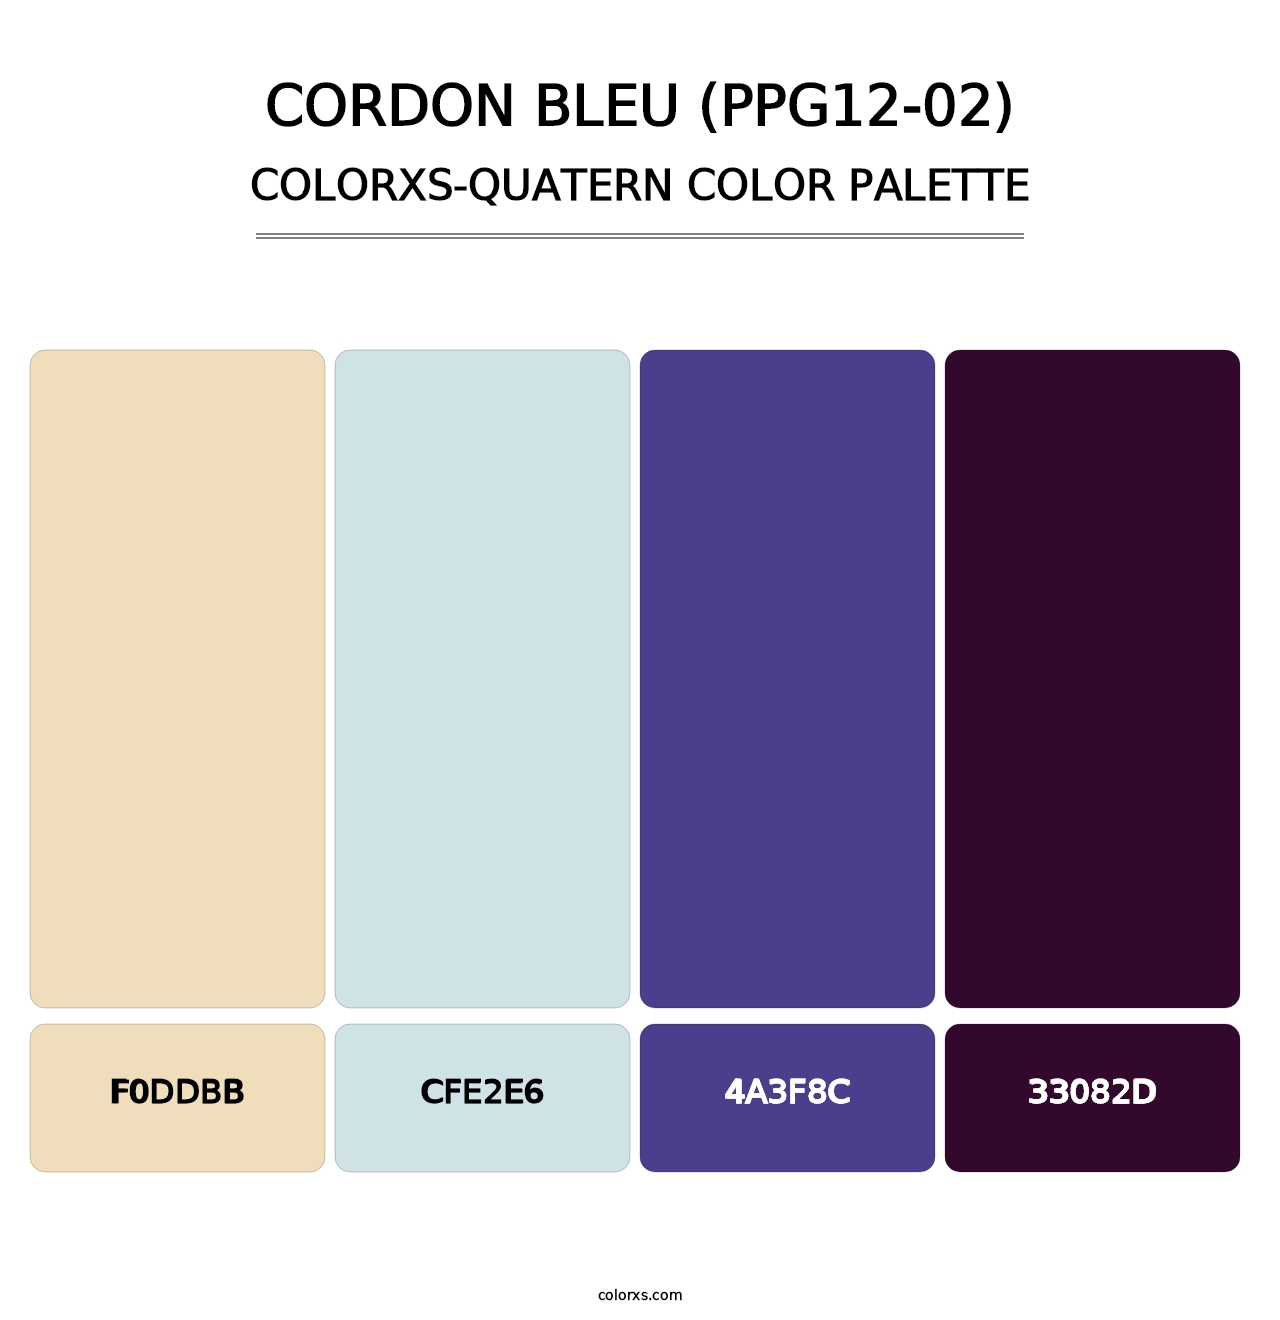 Cordon Bleu (PPG12-02) - Colorxs Quatern Palette